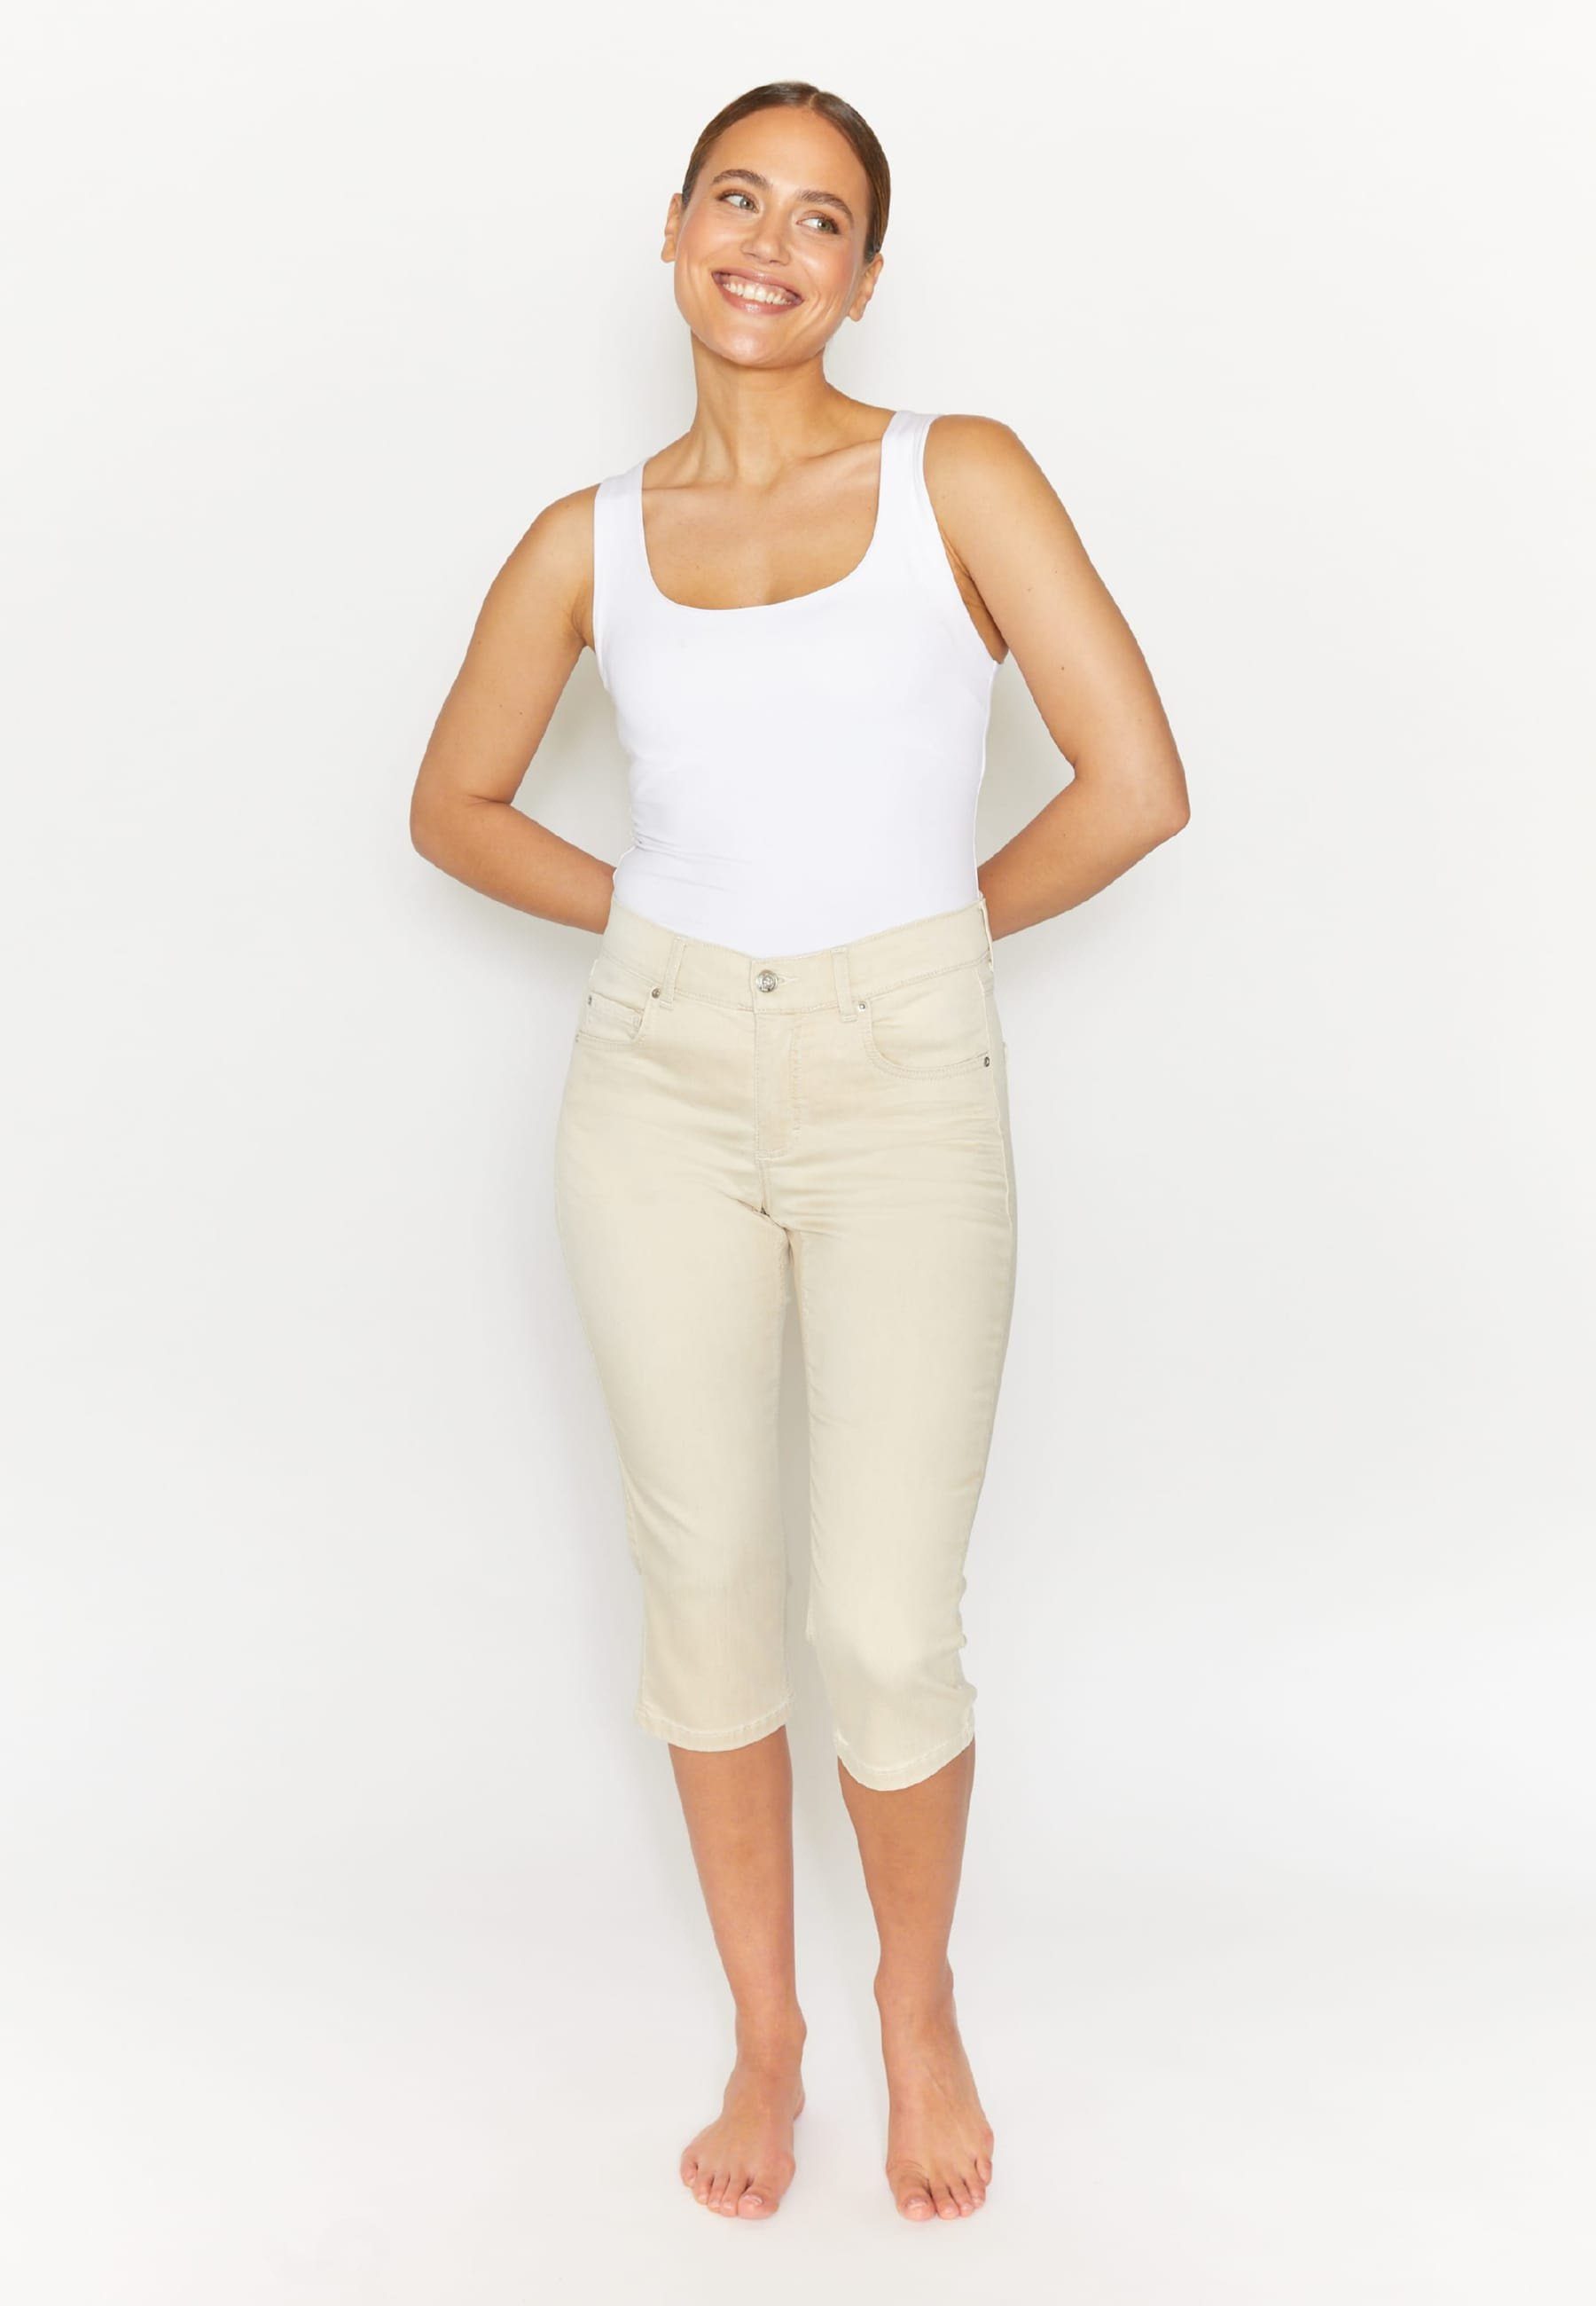 used mit ANGELS Anacapri Label-Applikationen Slim-fit-Jeans beige light Denim Stretch Jeans mit Super